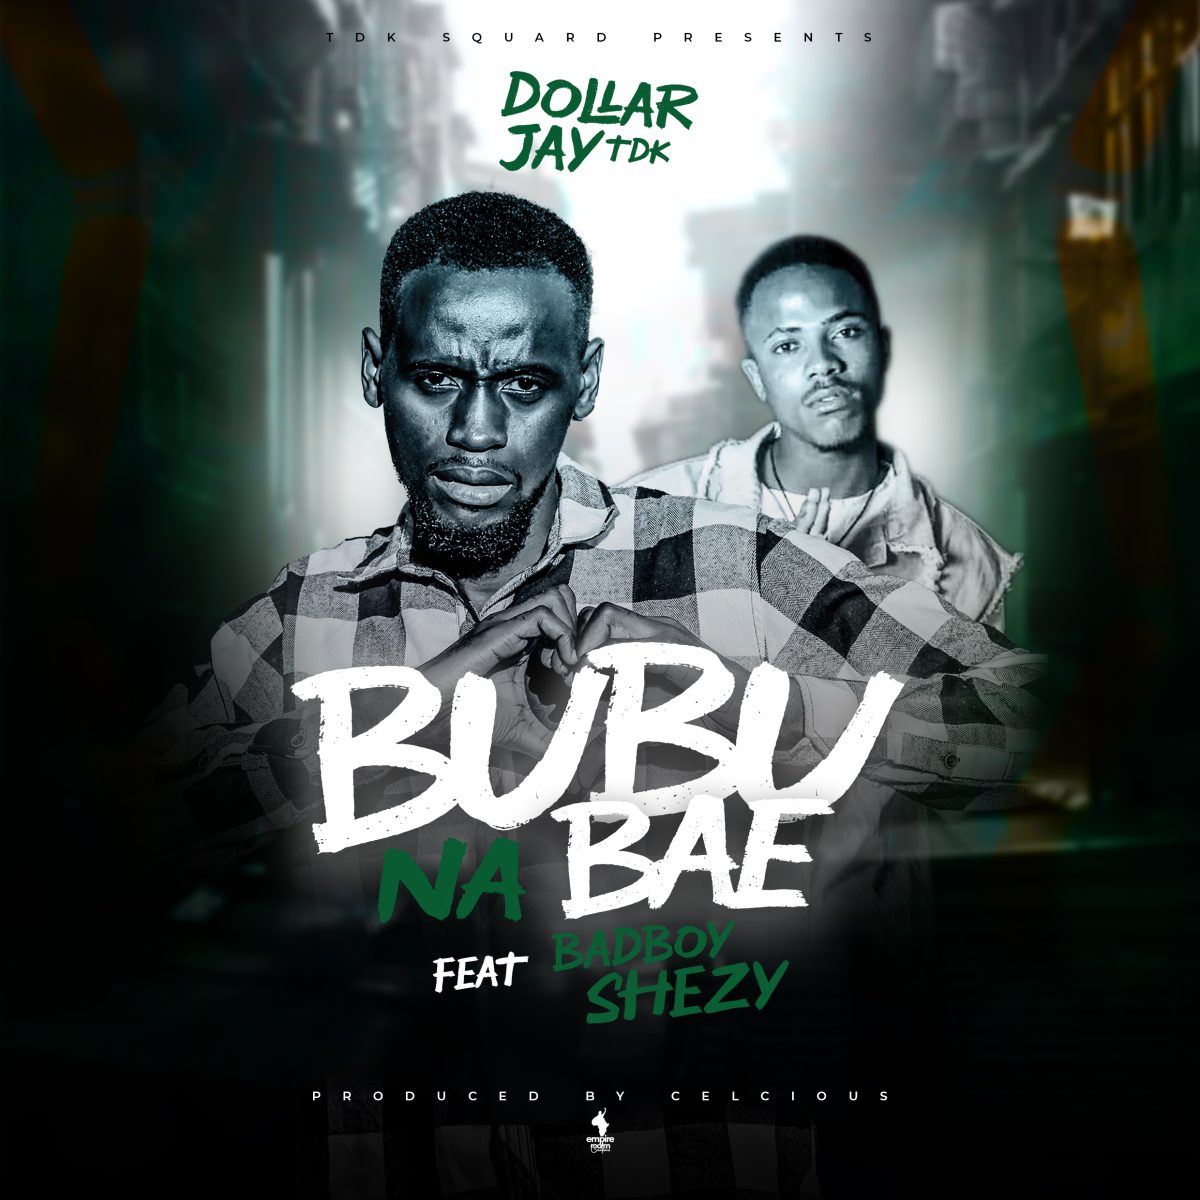 Dollar Jay TDK ft. Badboy Shezy - Bubu Na Bae